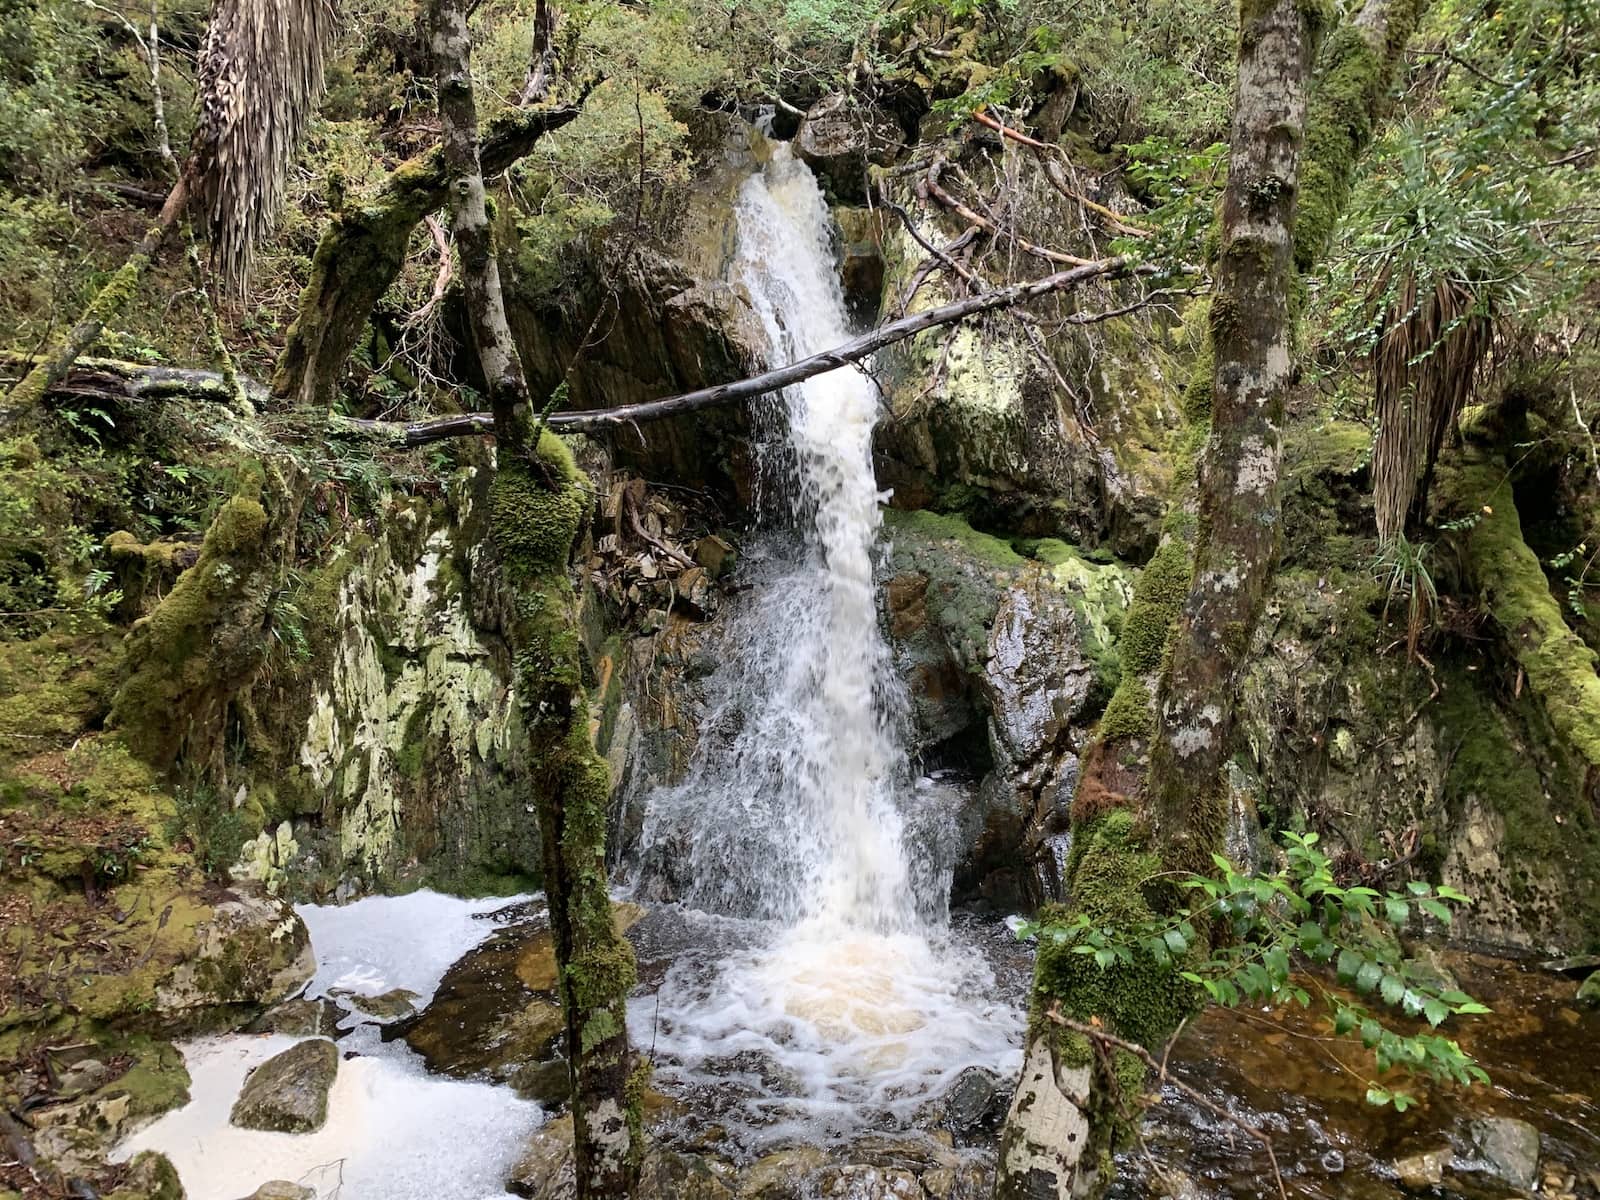 A waterfall amongst rocks and trees